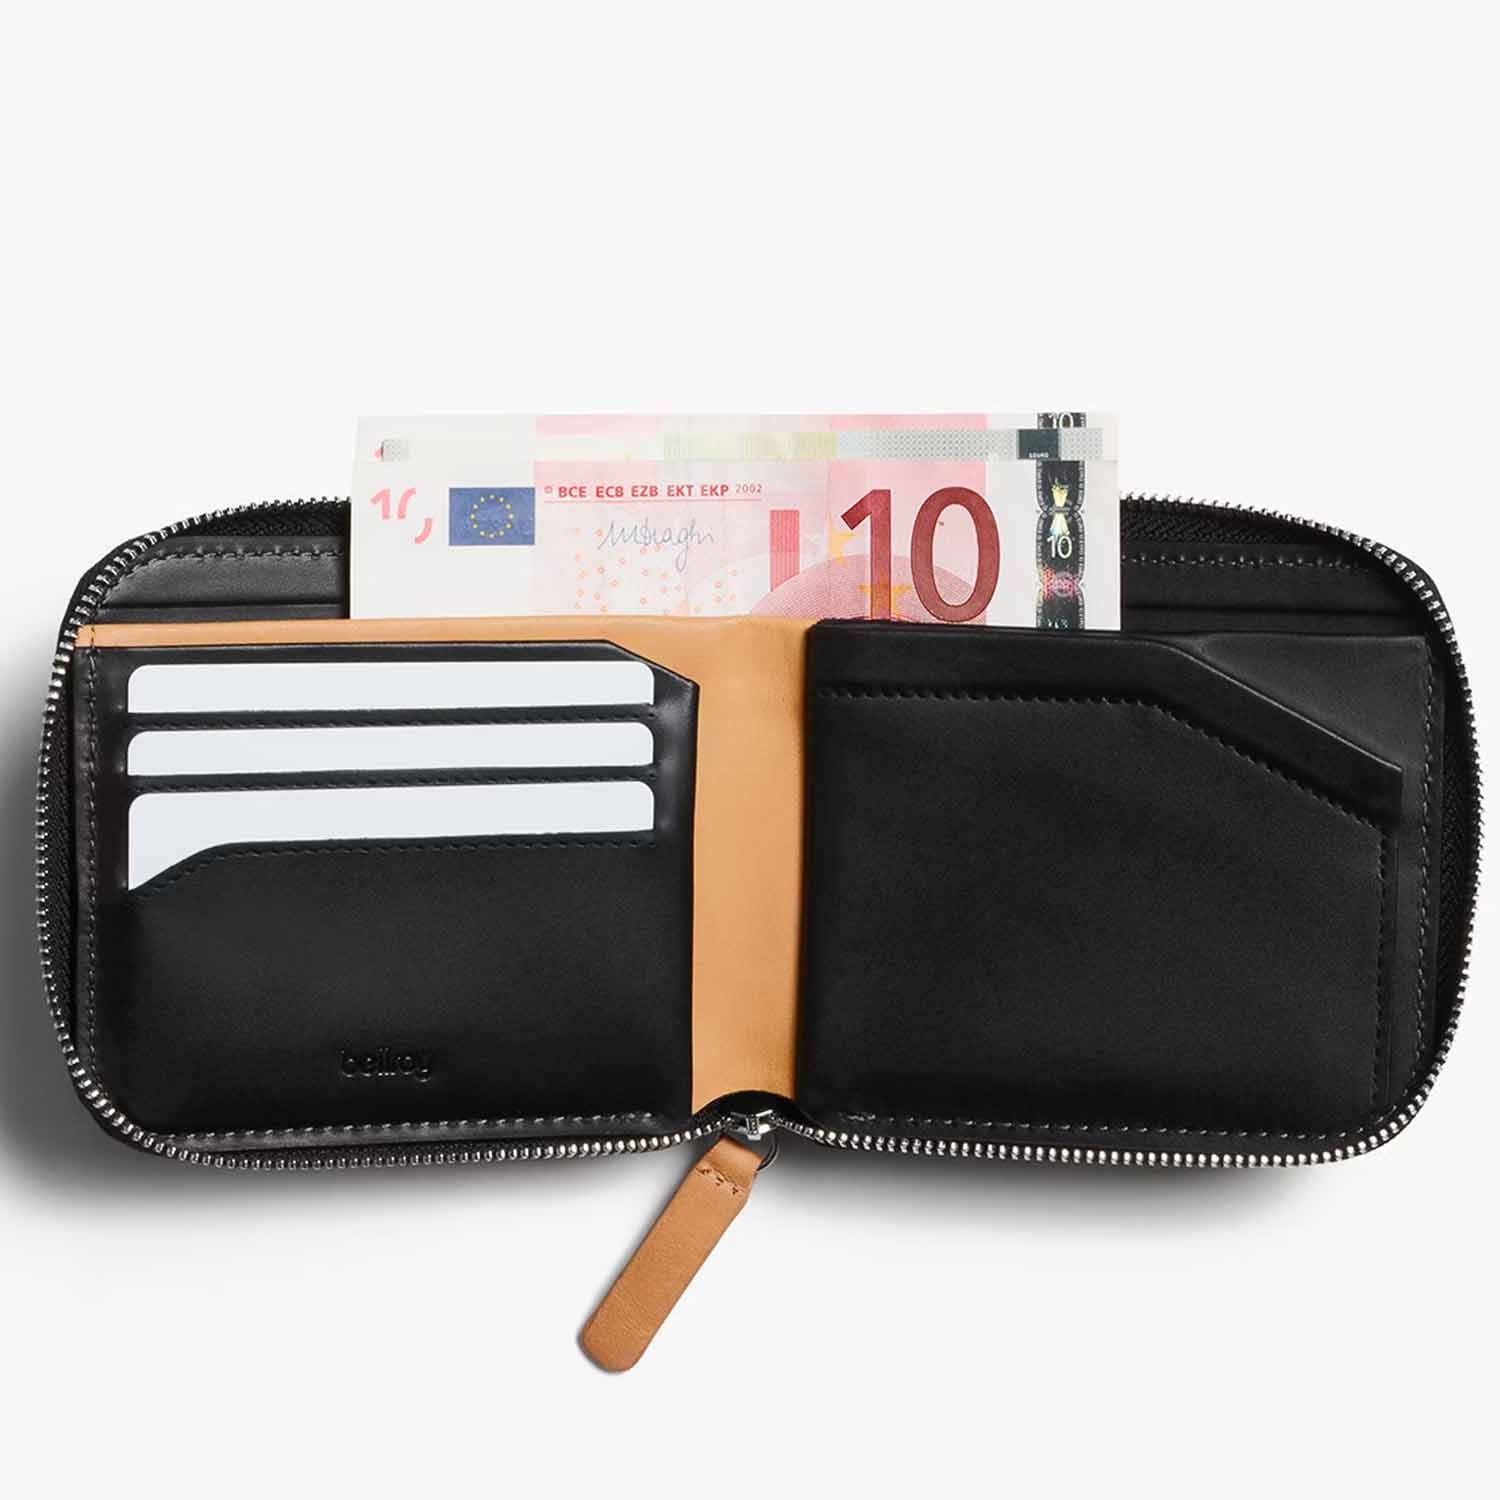 Brieftasche-Bellroy-zip-wallet-black.jpg